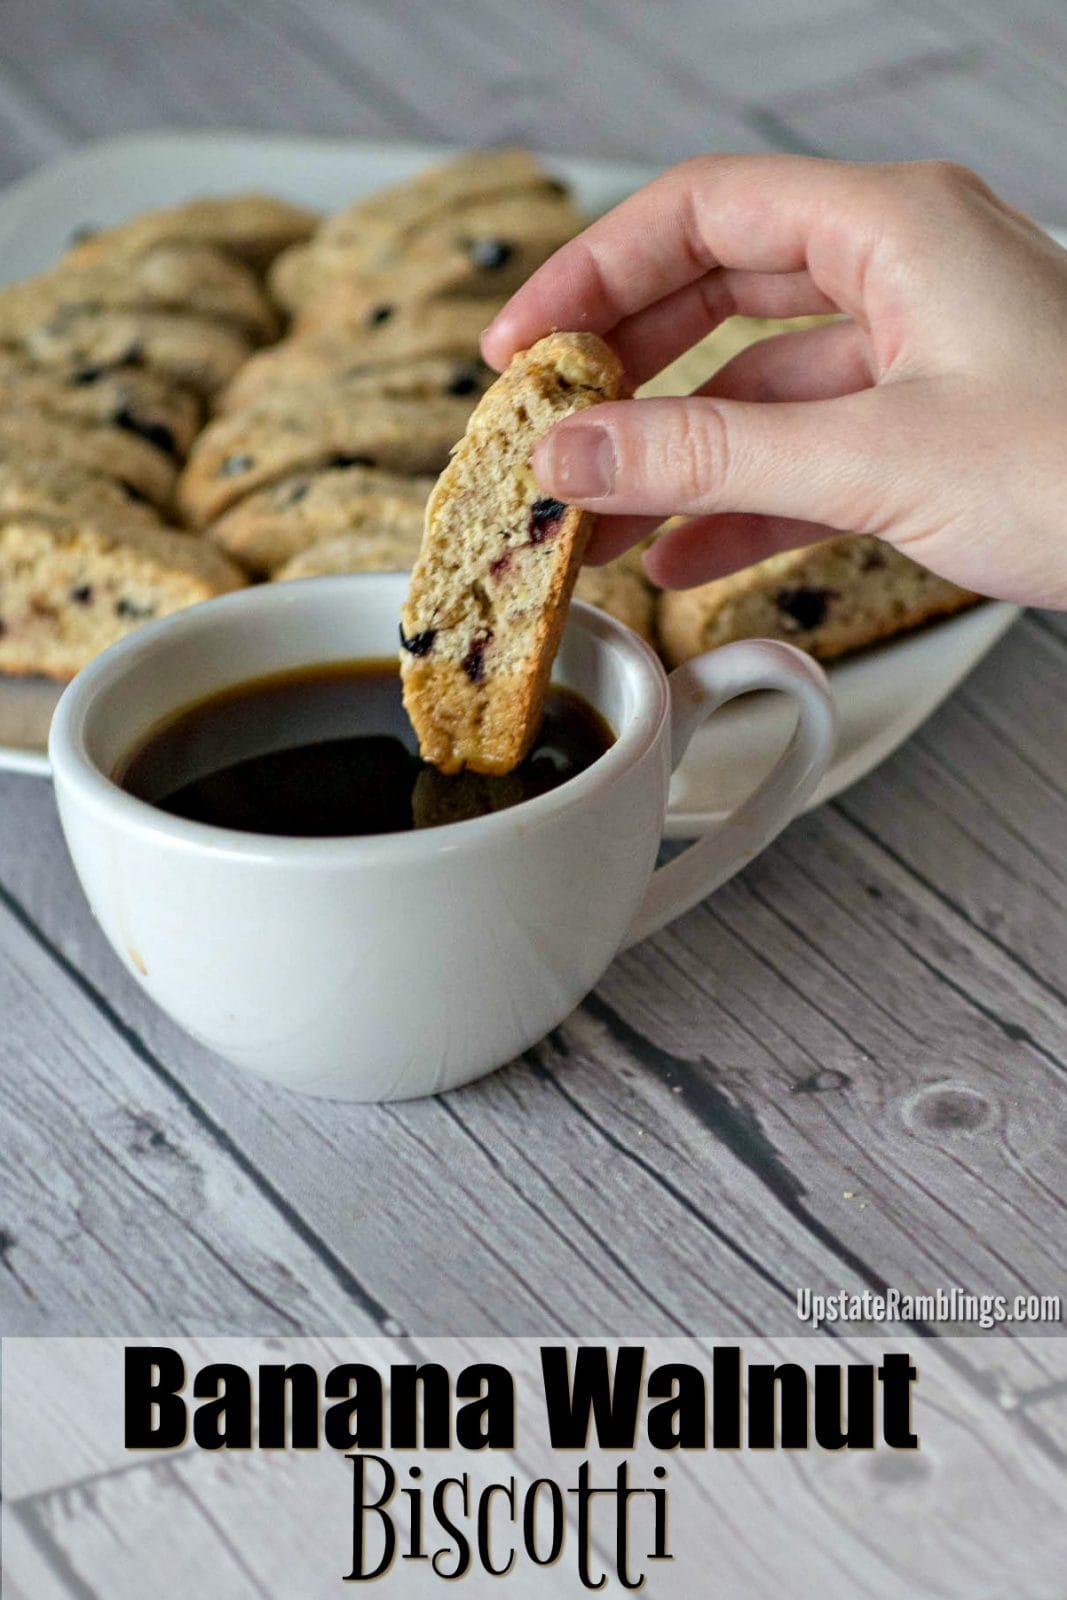 Walnut biscotti dipped in coffee.